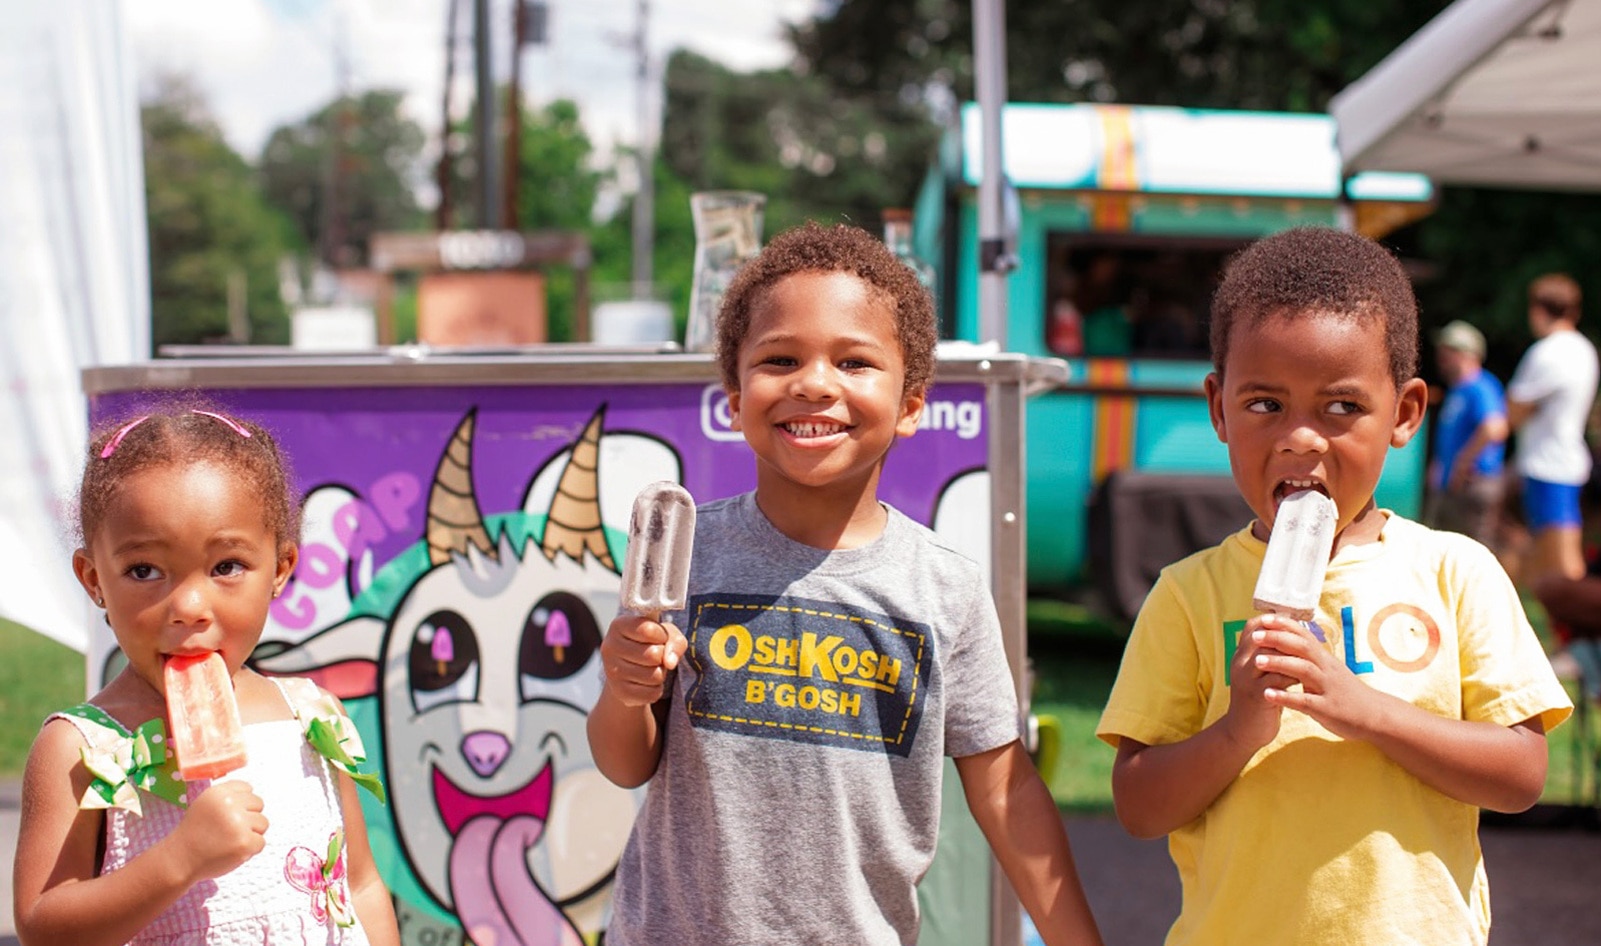 How Atlanta’s First Vegan Creamery Is Creating Community With Peach Cobbler Ice Cream